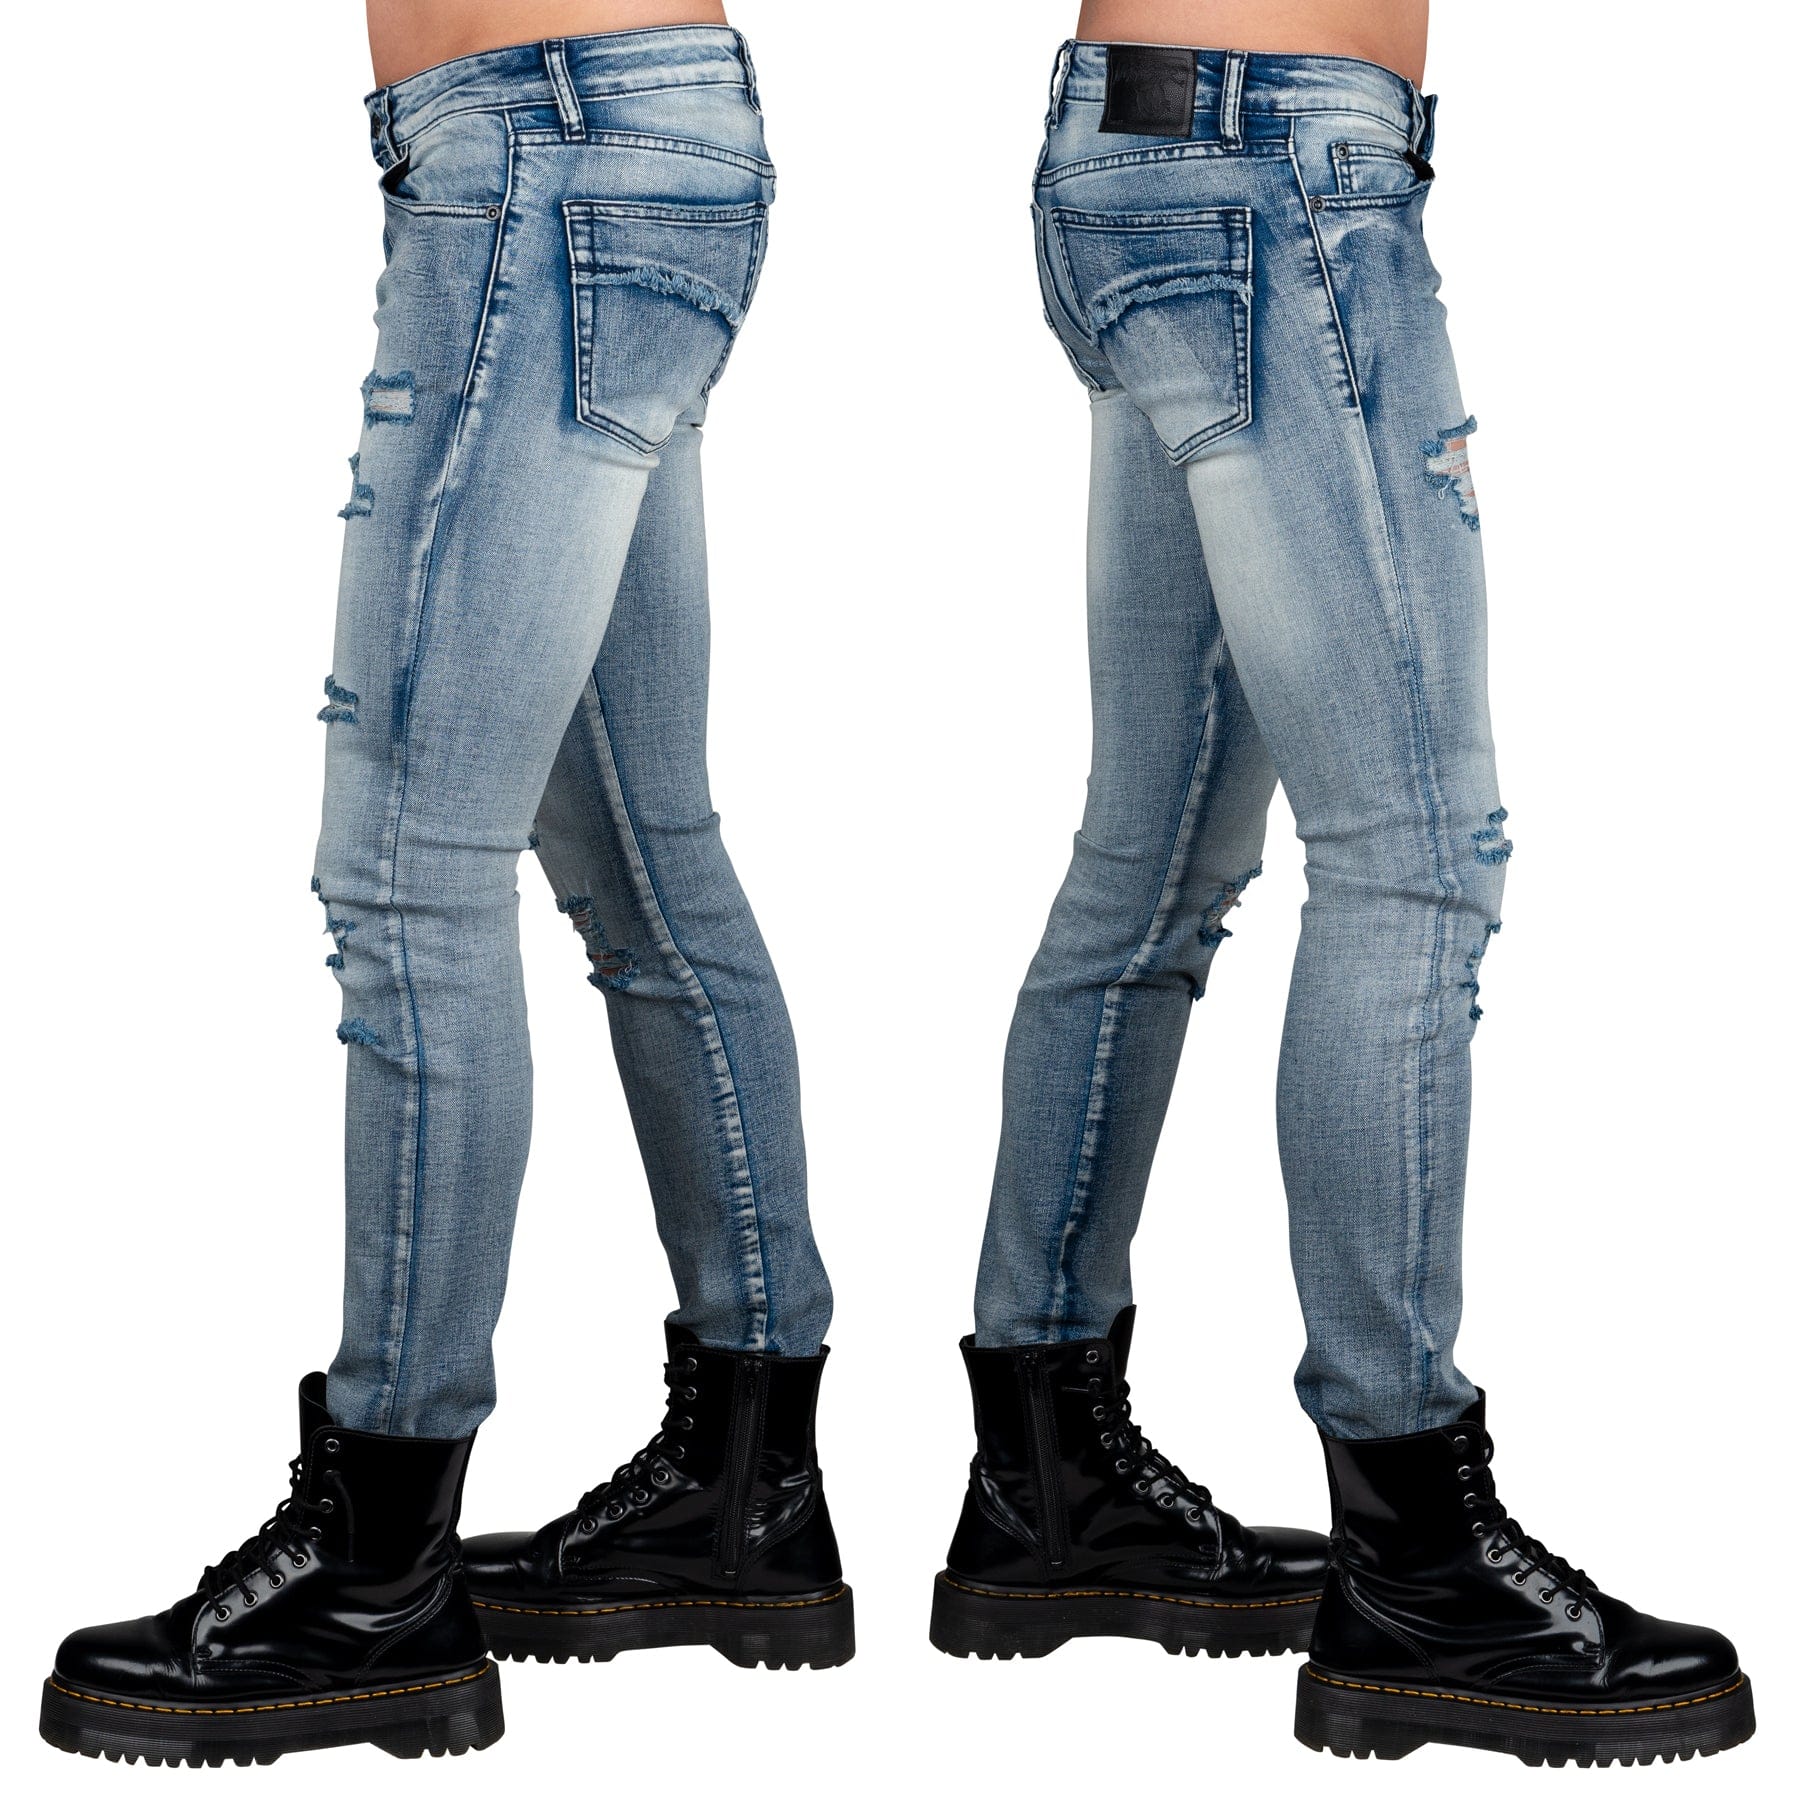 Wornstar Clothing Mens Jeans. Rampager Shredded Denim Jeans - Classic Blue